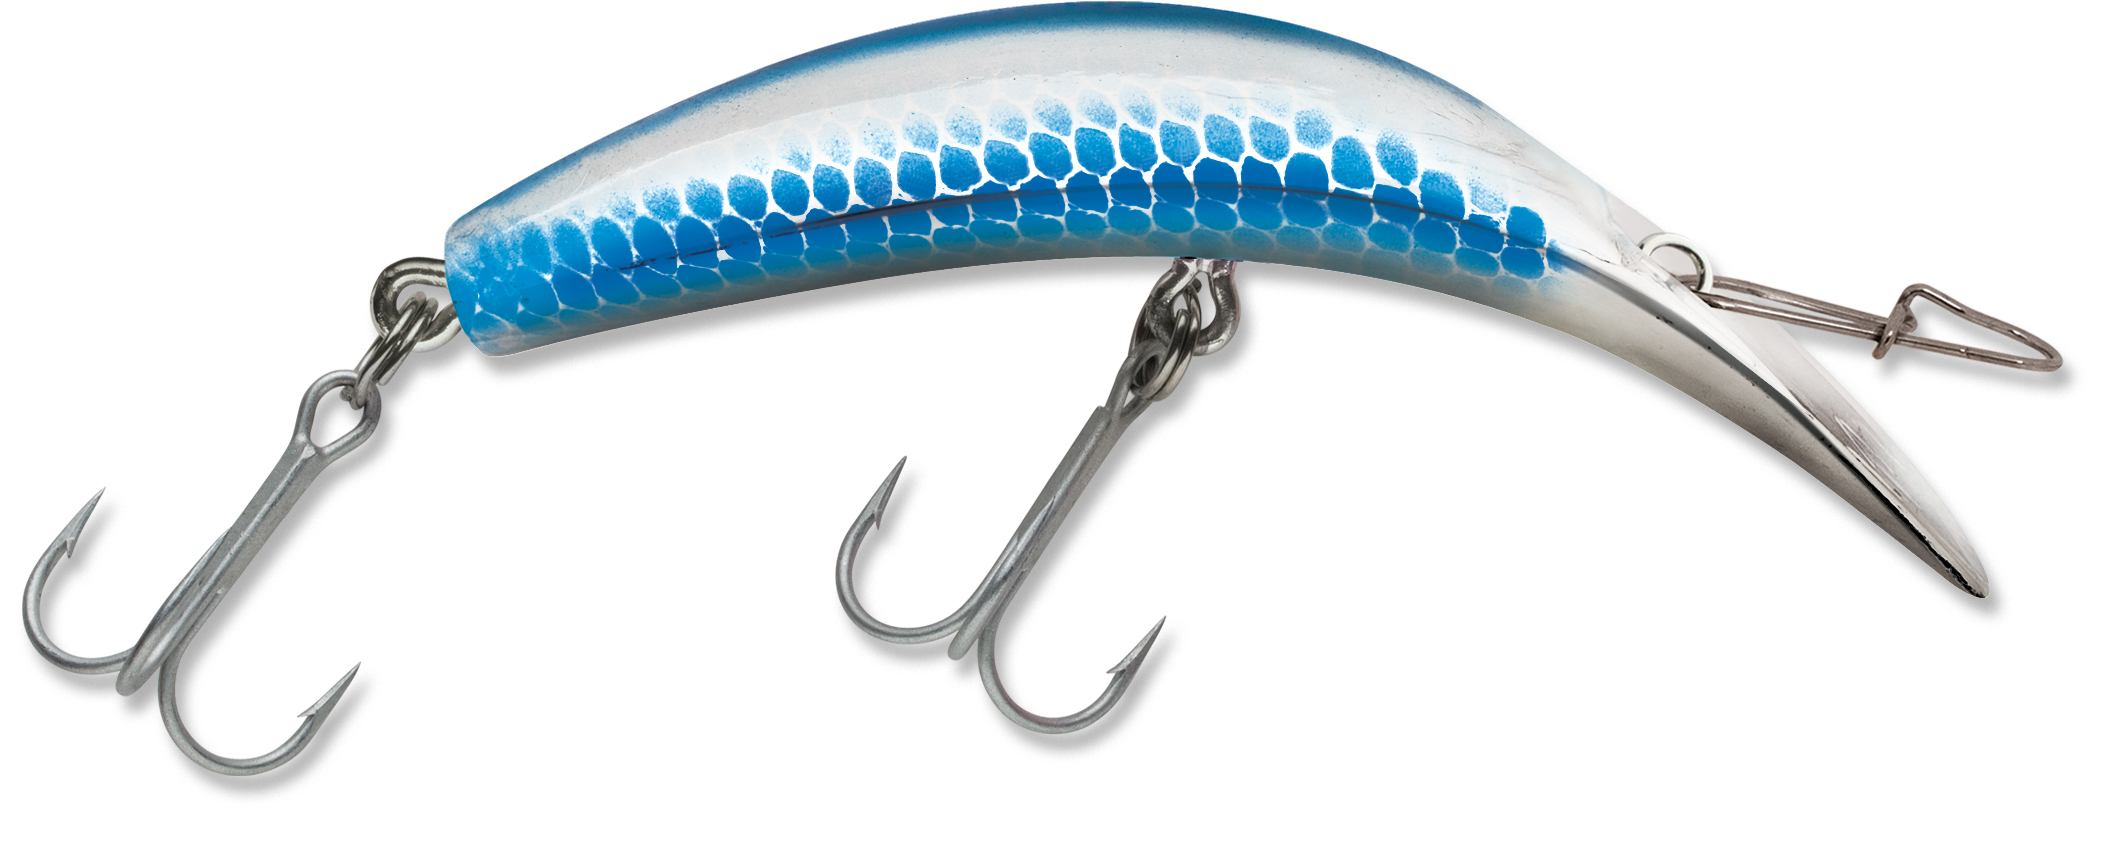 Luhr-Jensen Kwikfish K15 - Silver/Blue Scale - Precision Fishing